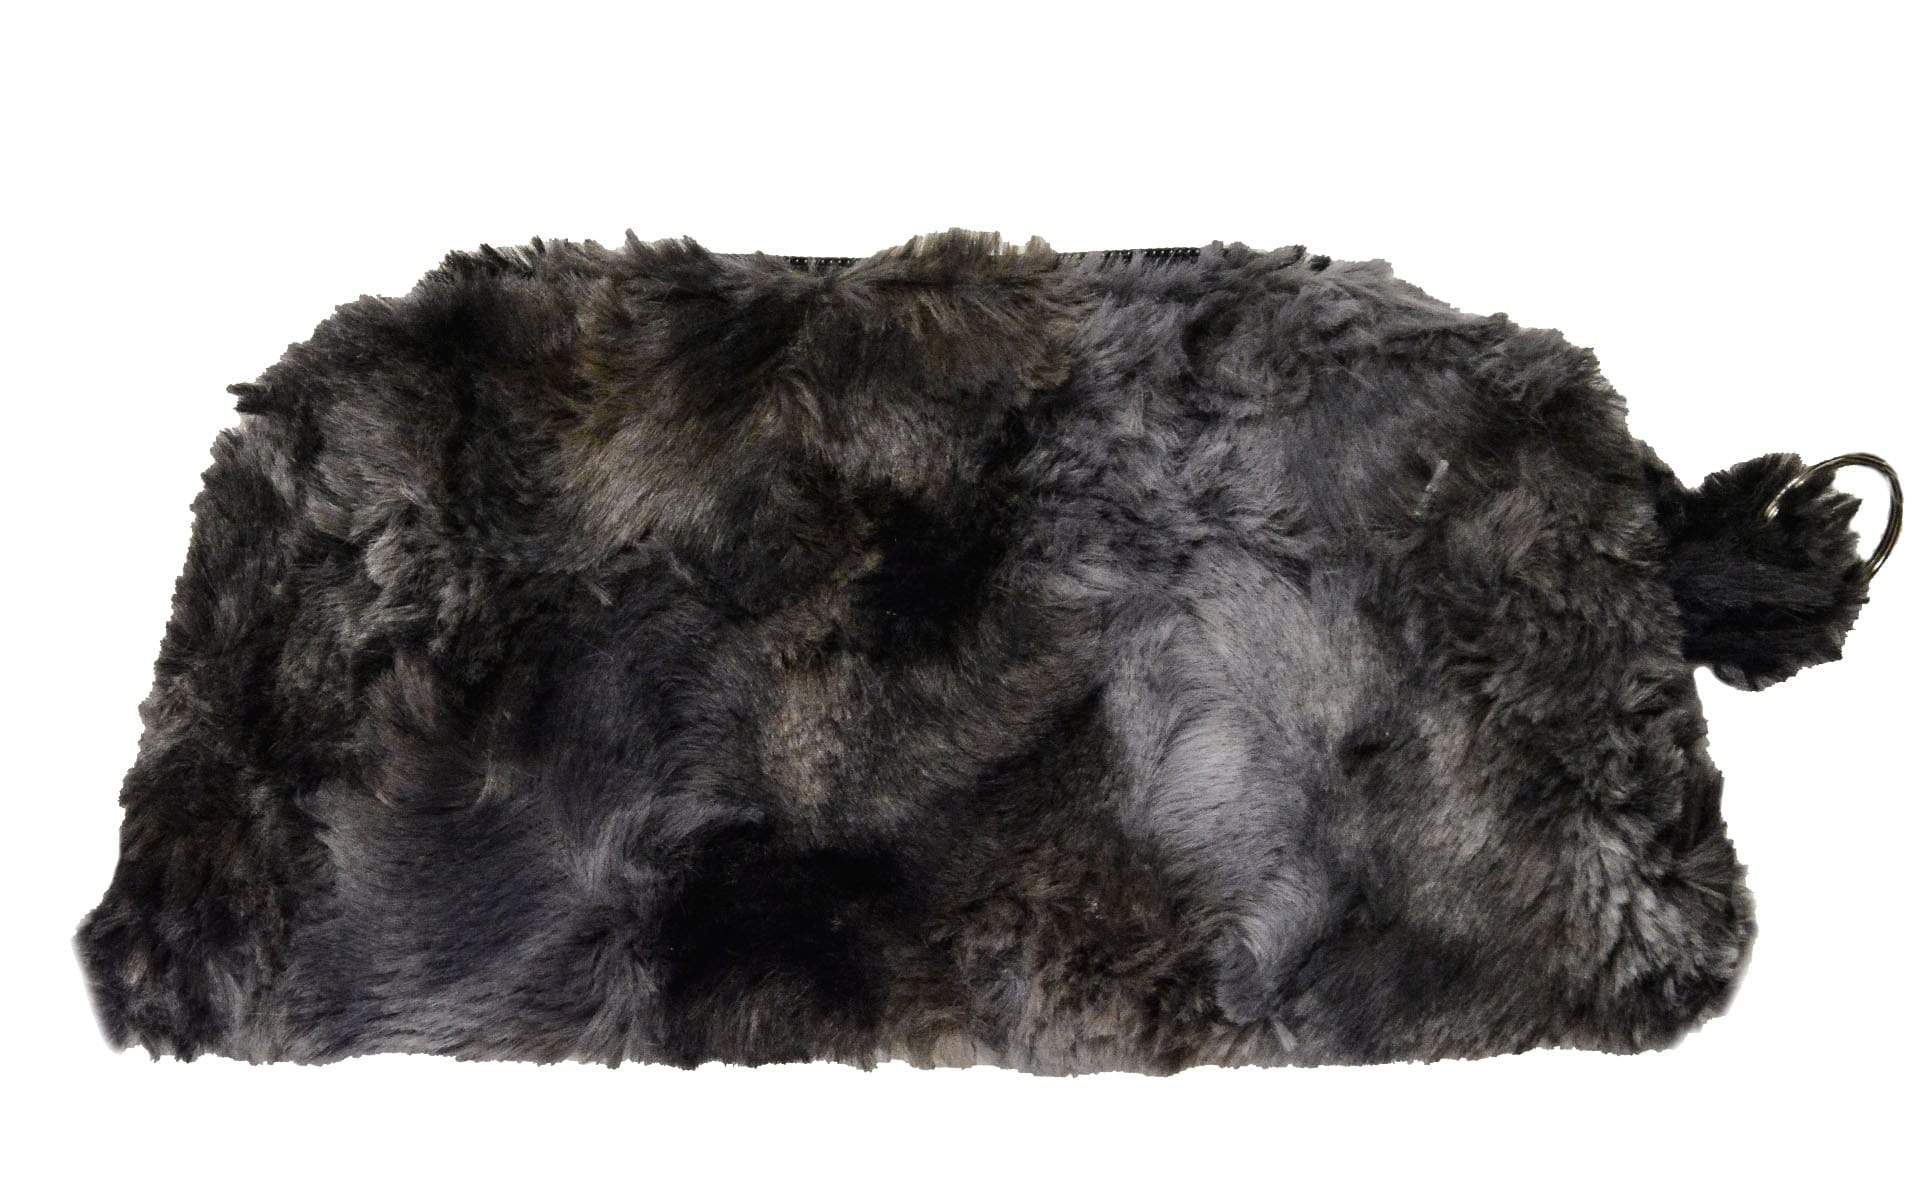 Cosmetic Bag in Highland Skye Faux Fur handmade in Seattle WA USA by Pandemonium Millinery